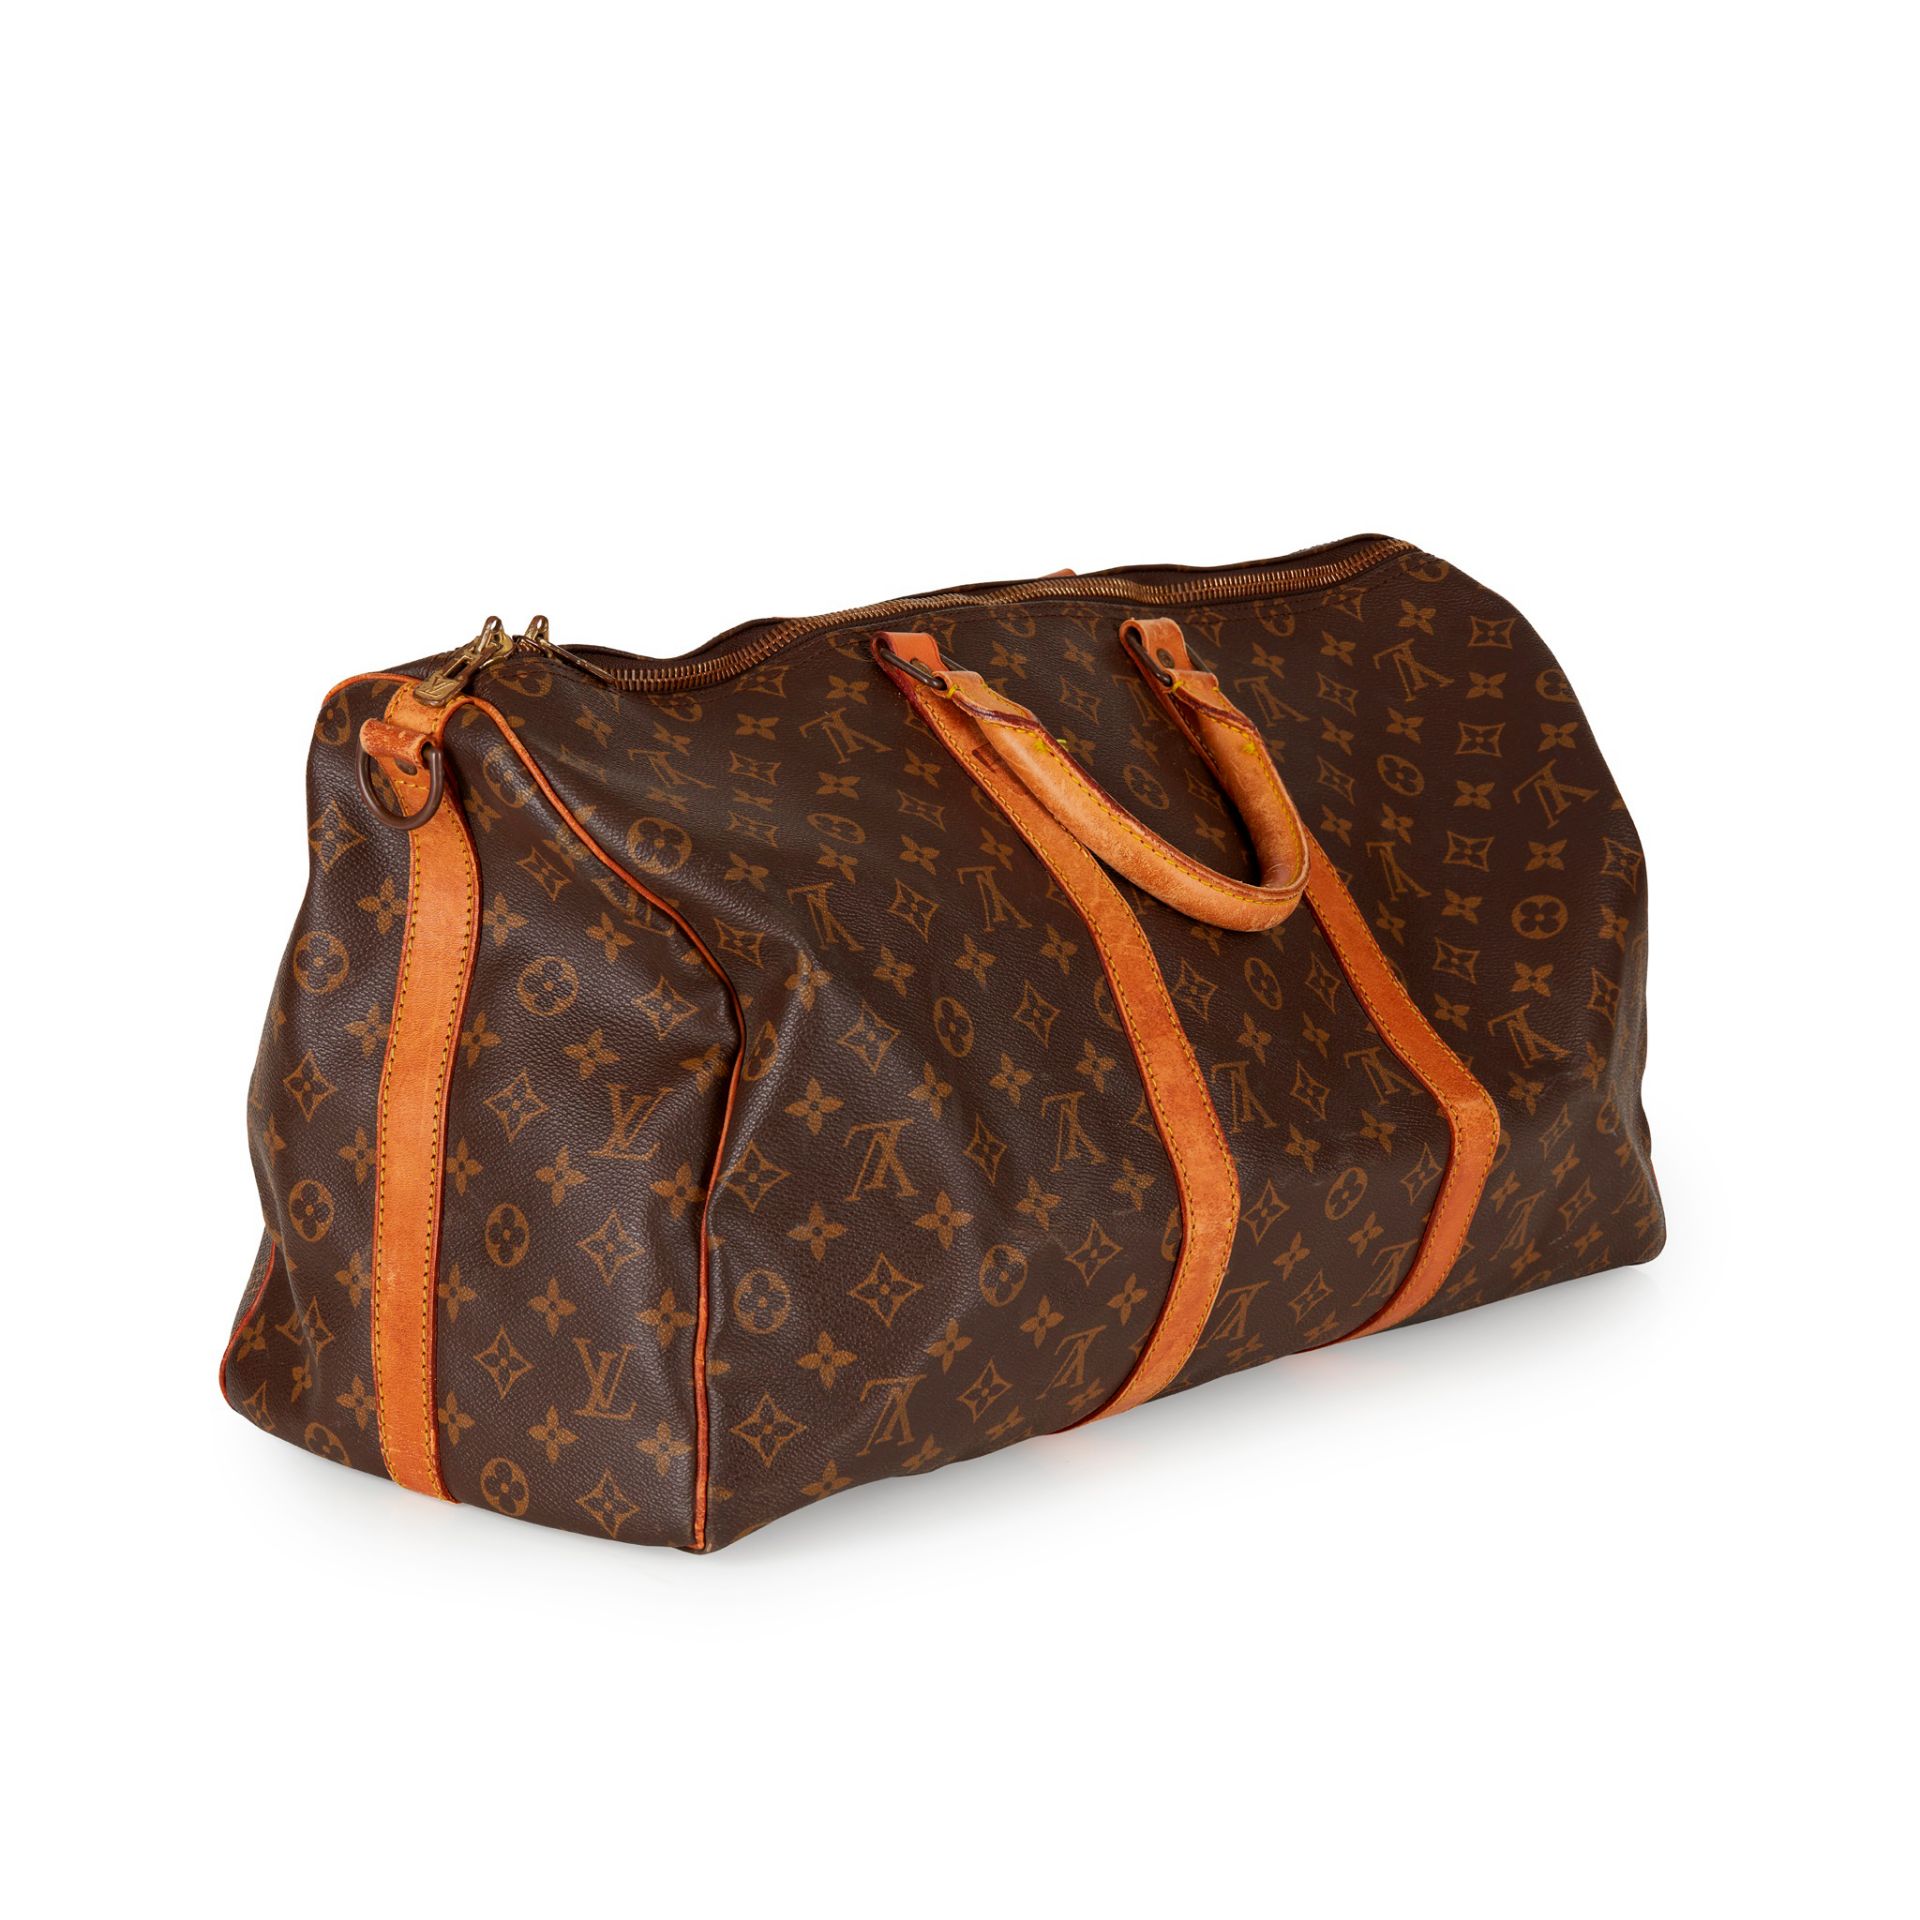 A 'Keepall Bandouliere 50' travel bag, Louis Vuitton